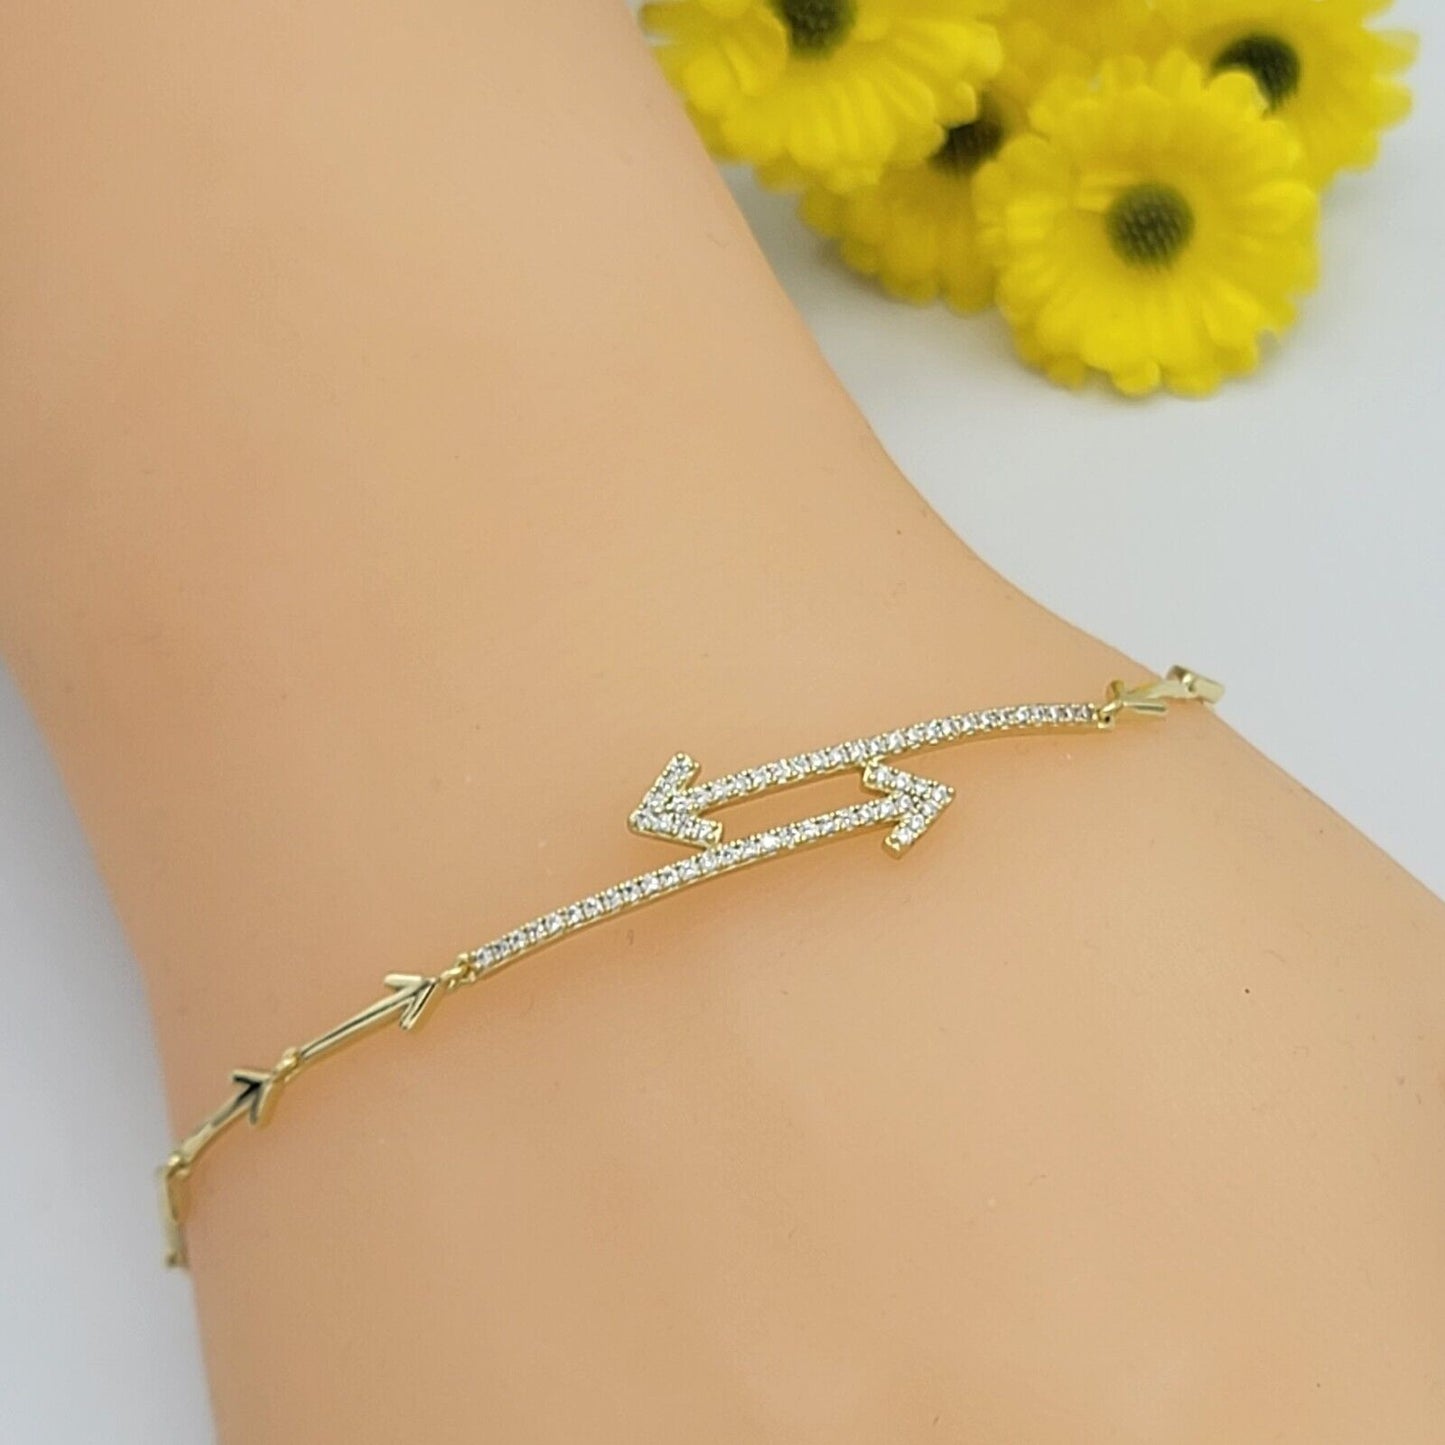 Bracelets - 14K Gold Plated. Arrow Link Bracelet Strength & Protection Symbol